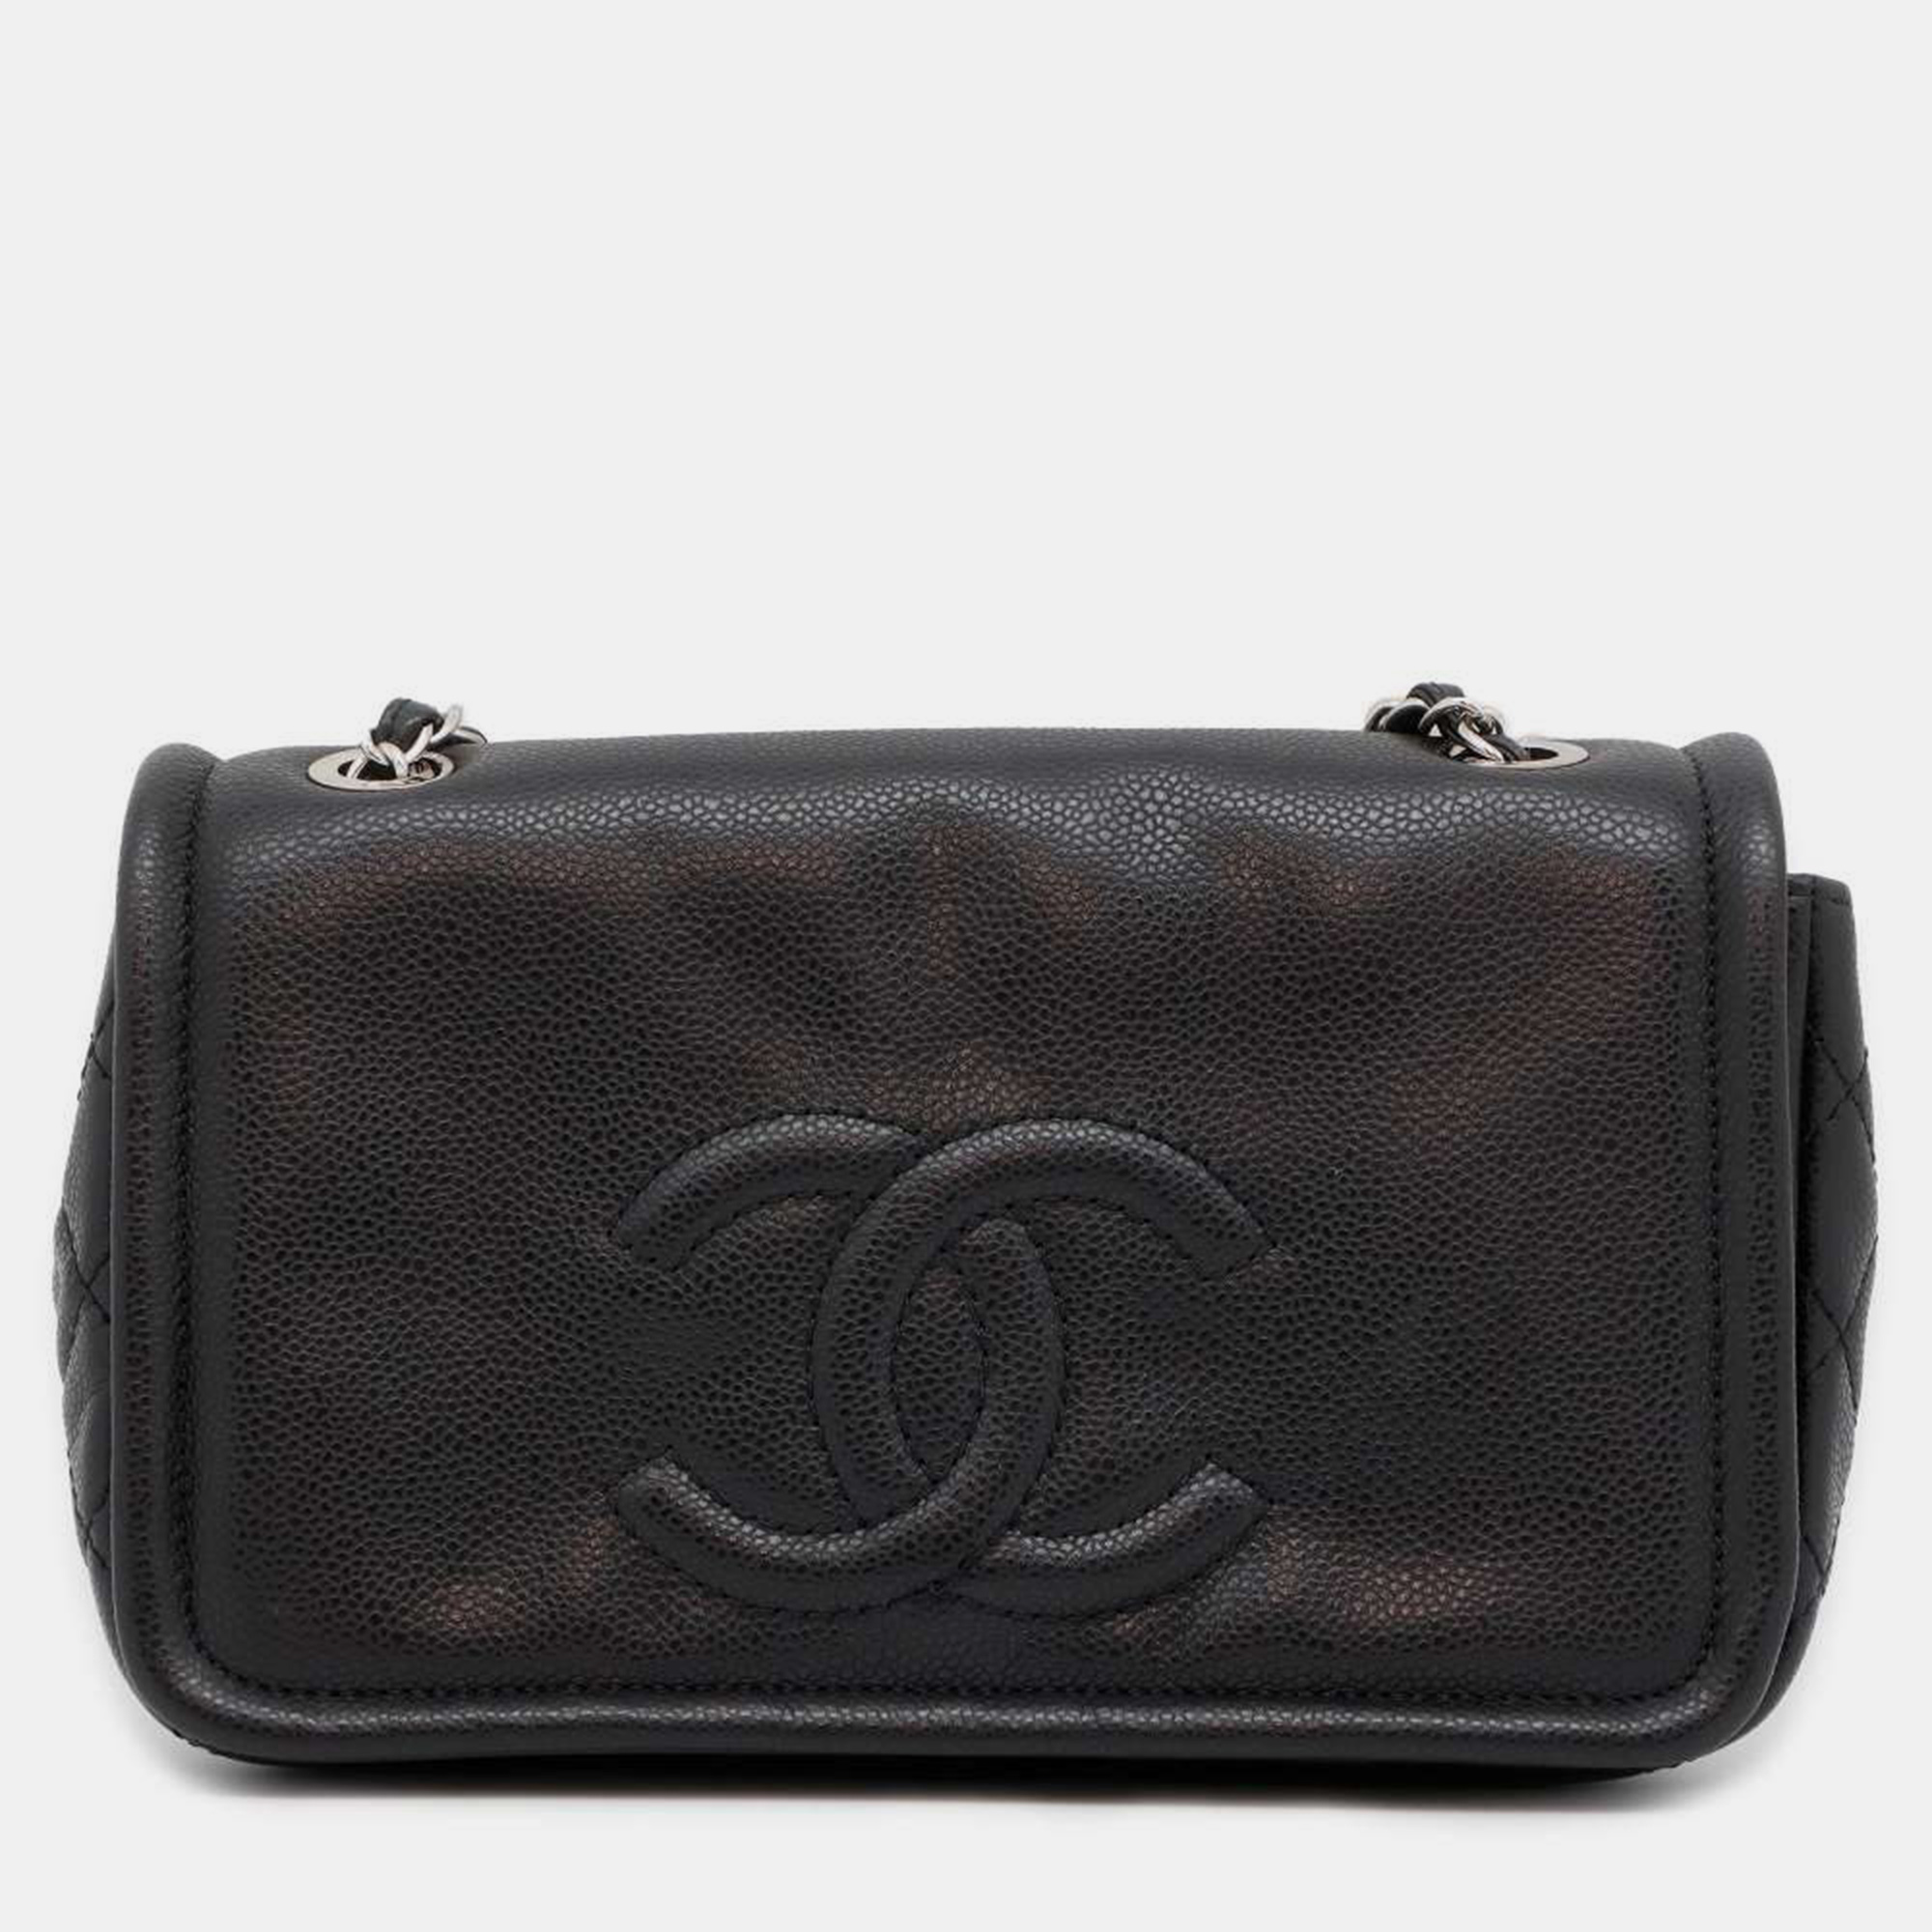 Chanel black caviar leather cc logo chain shoulder bag